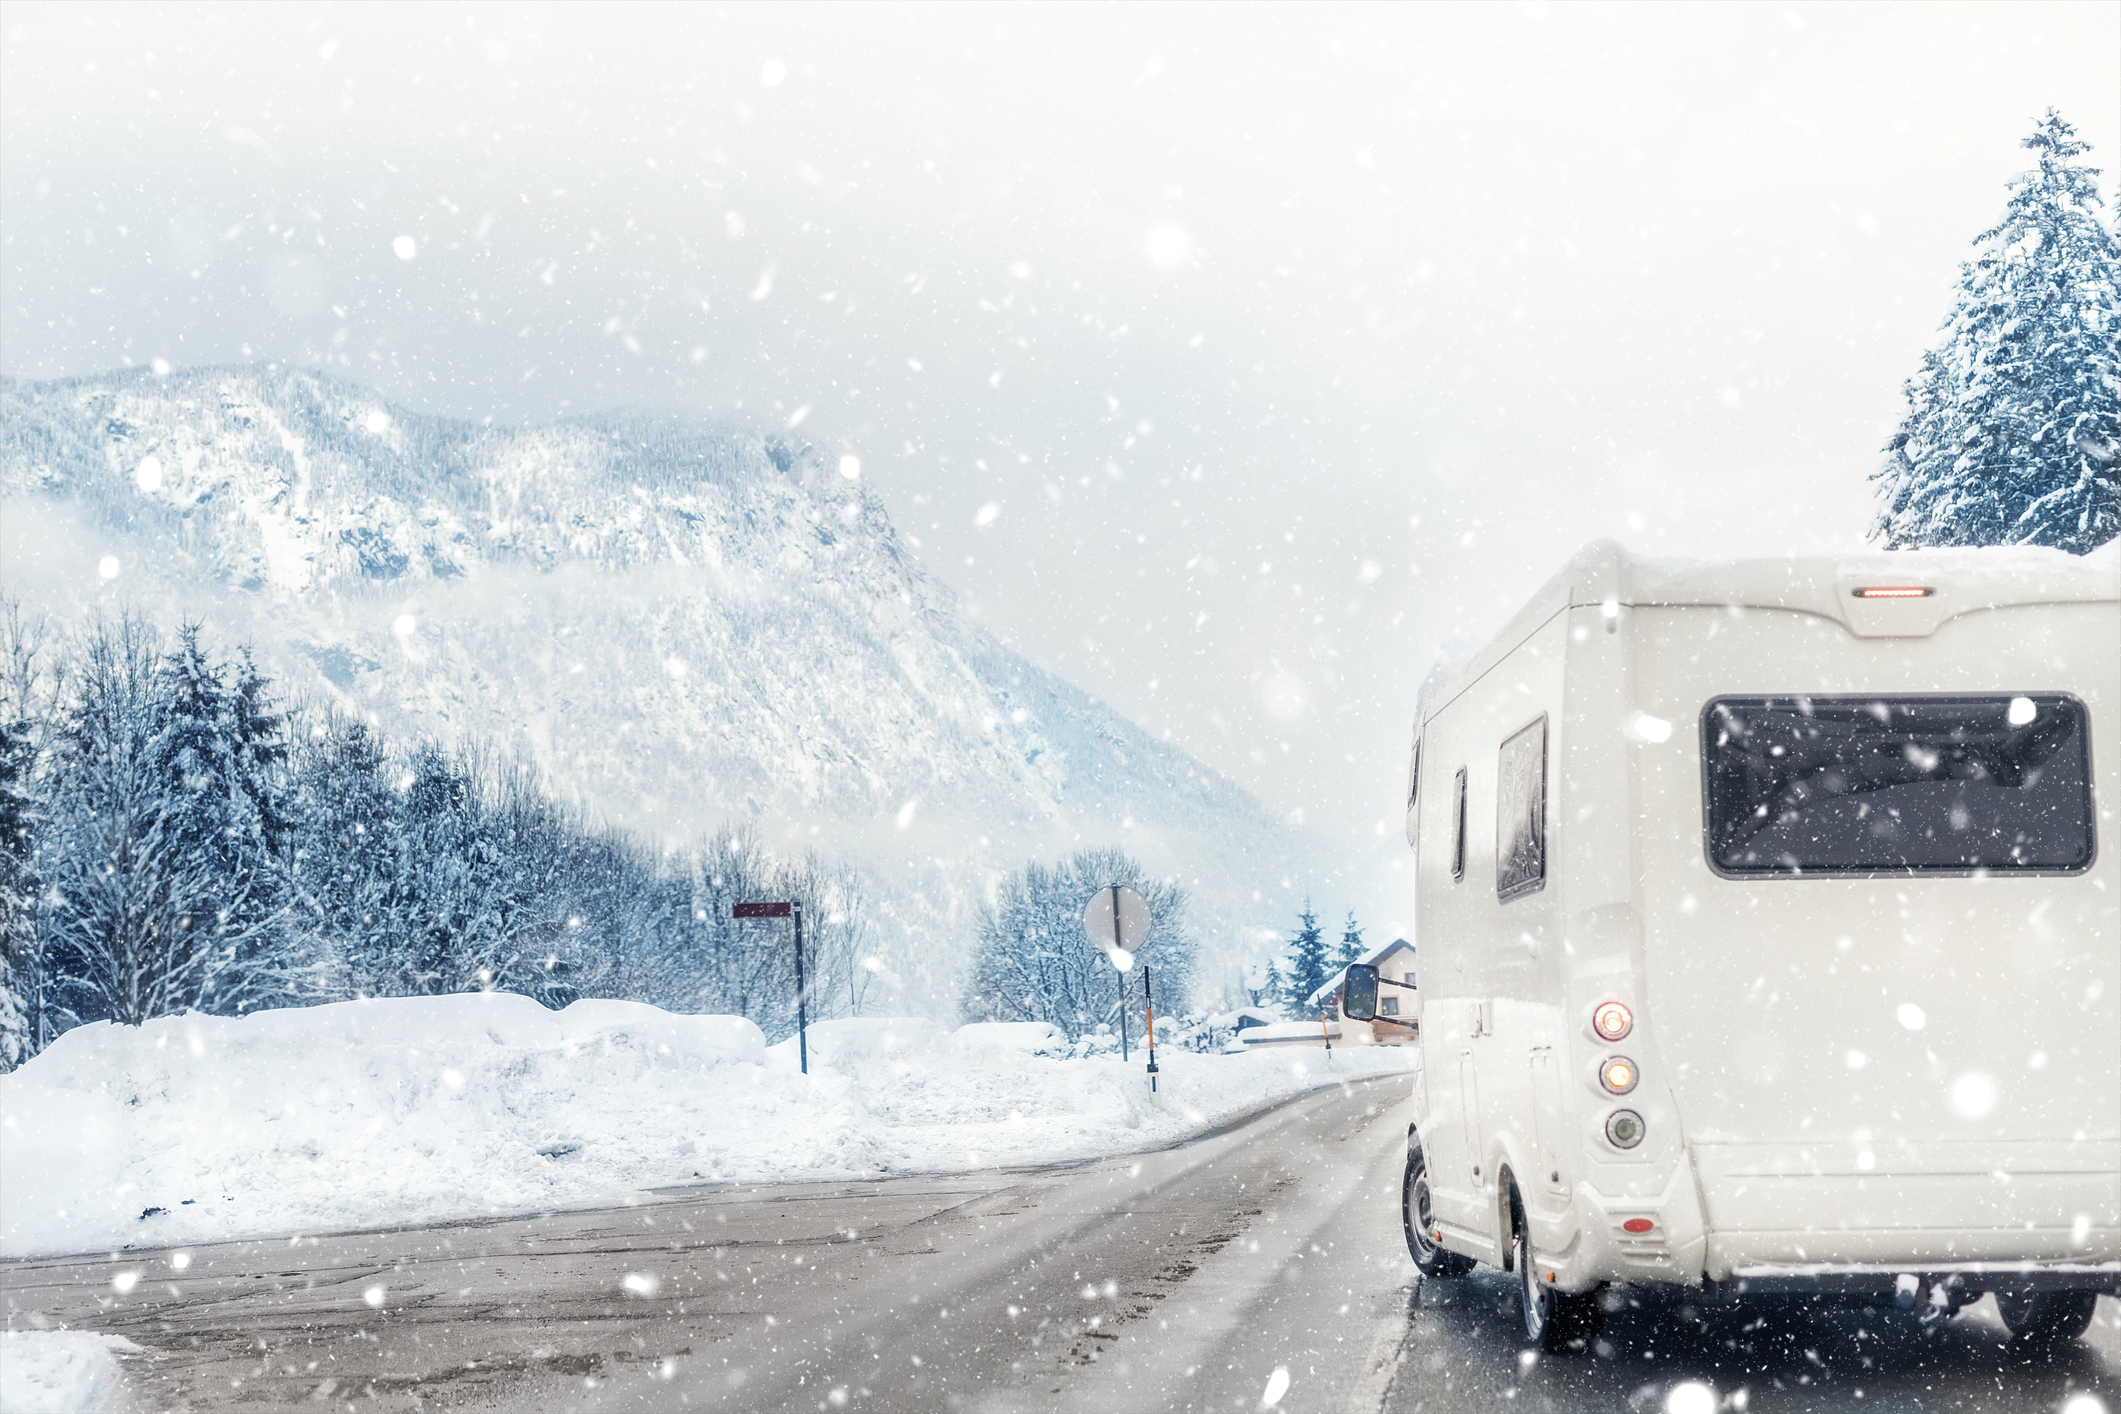 Winter RV Camping: 10 Essential Tips - NerdWallet